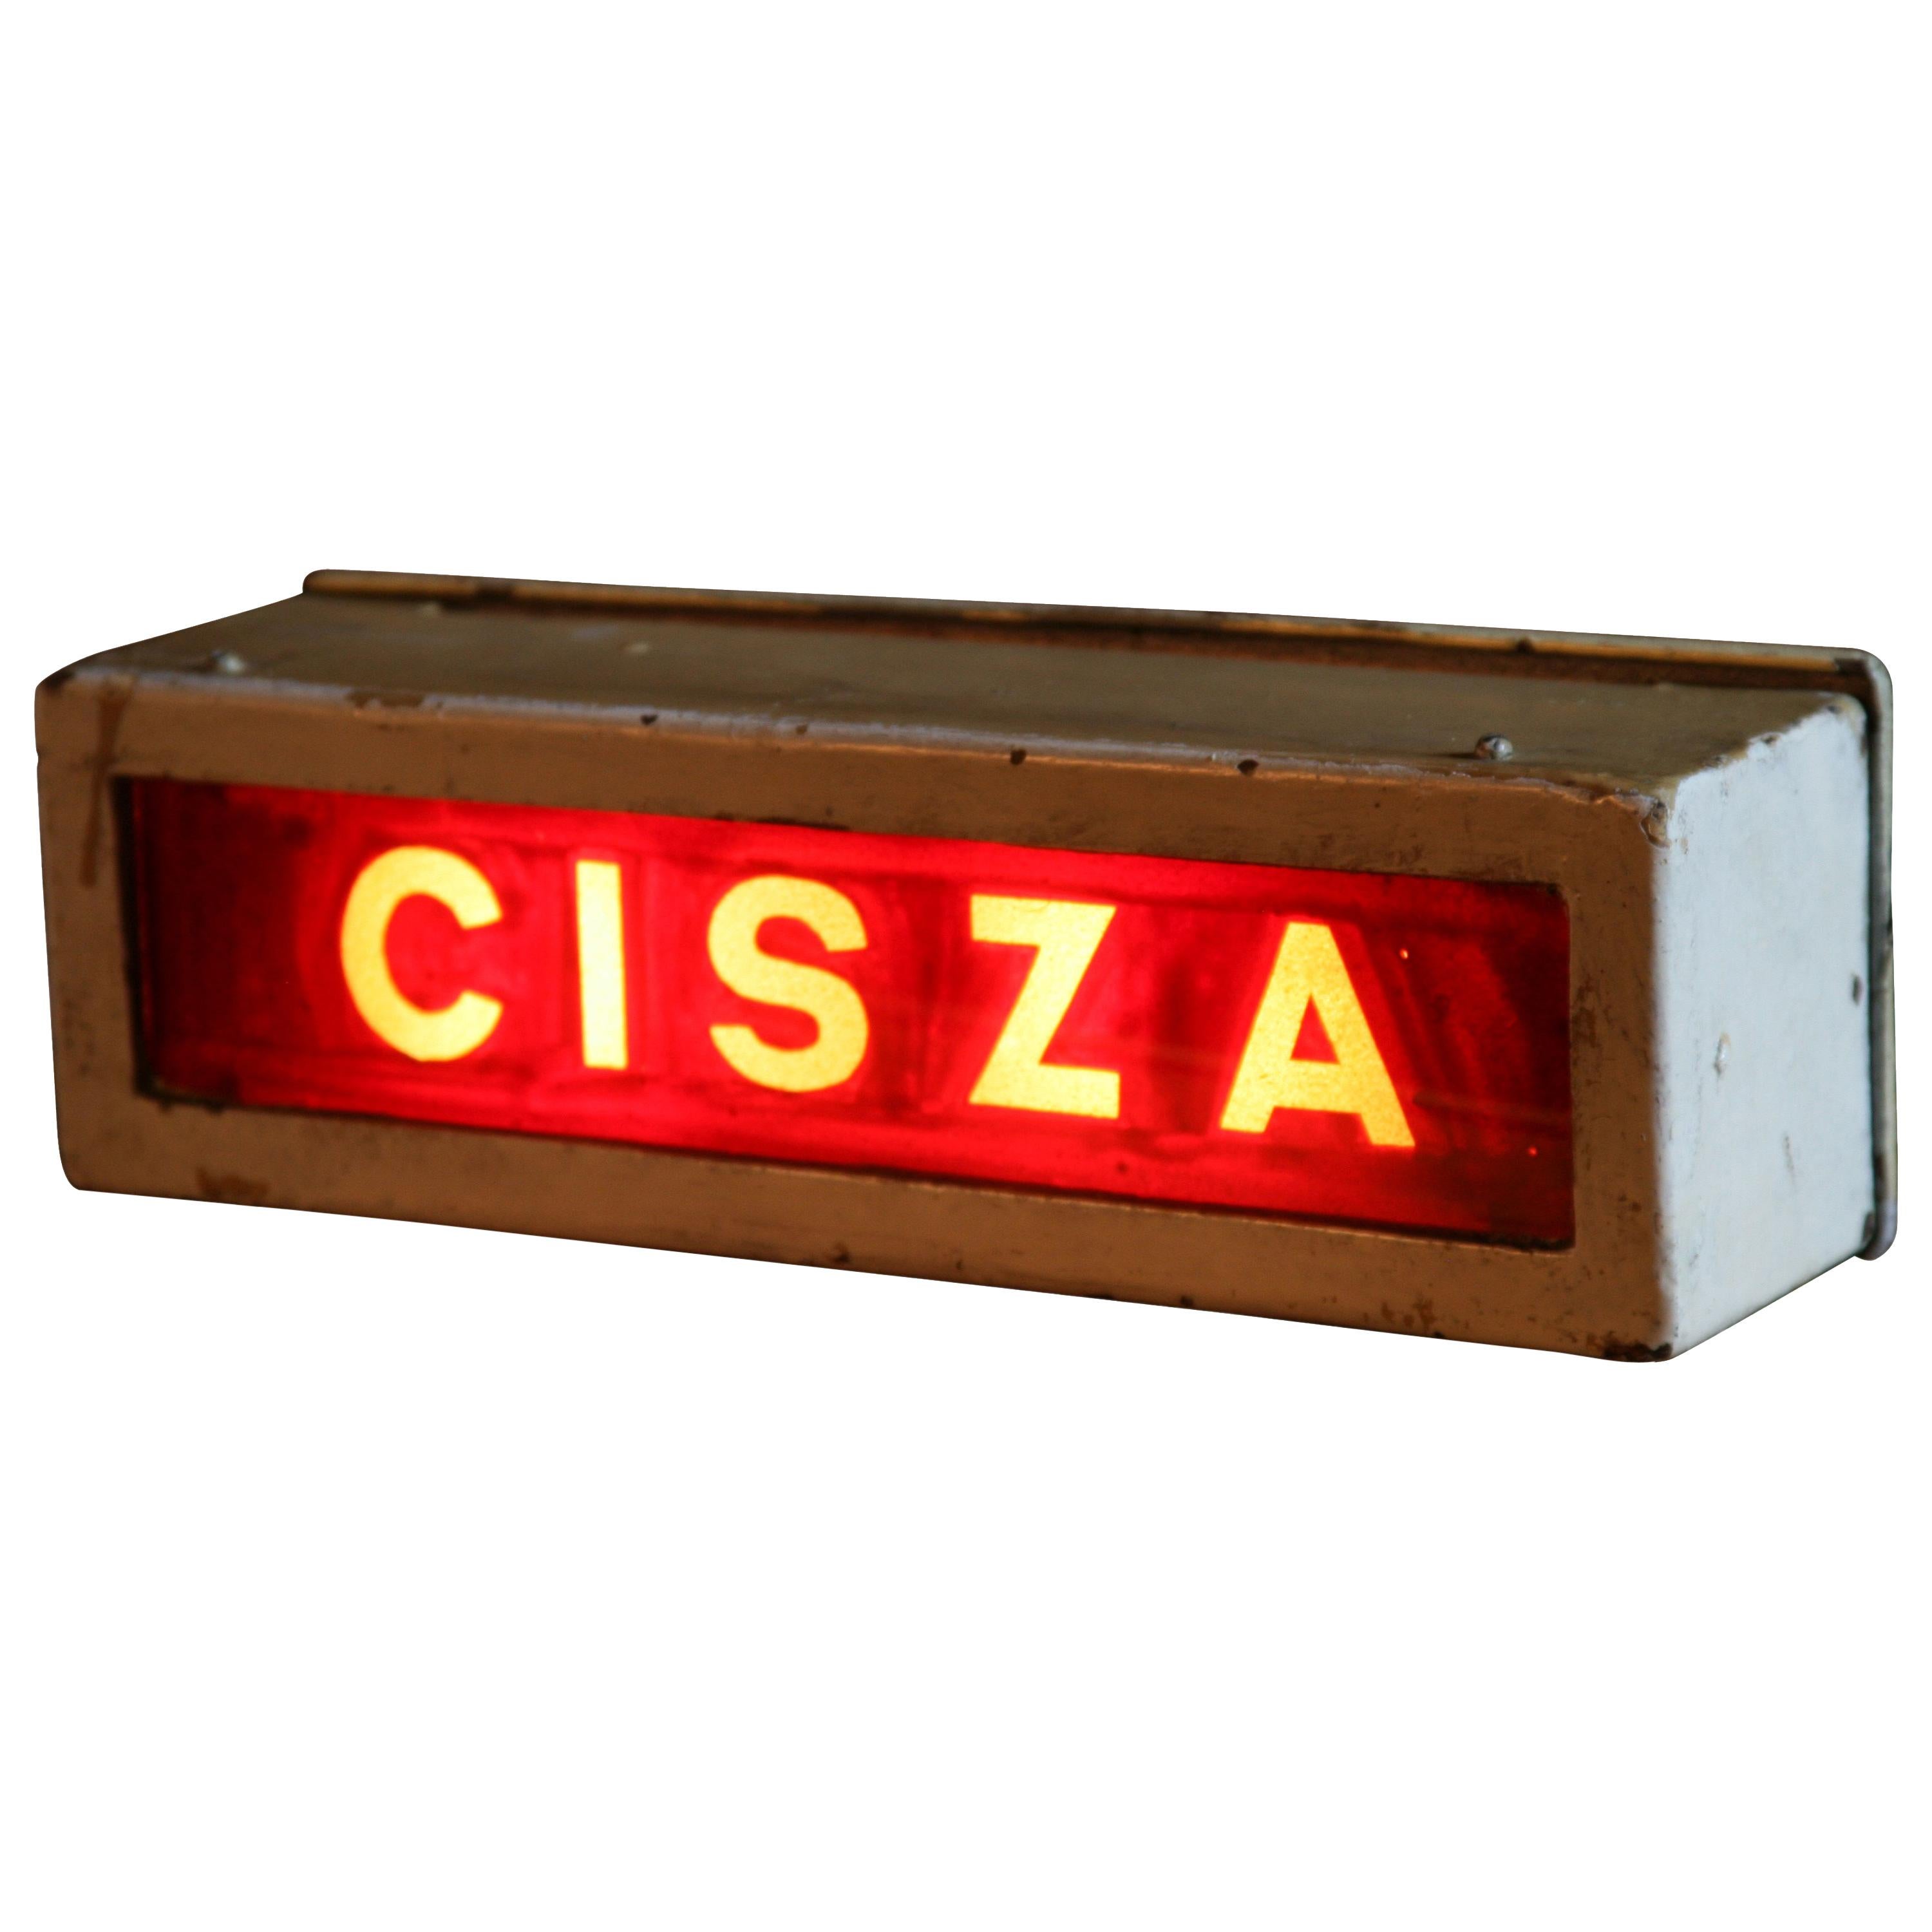 1950s Illuminated Theater Sign “CISZA”, Meaning “Silence”